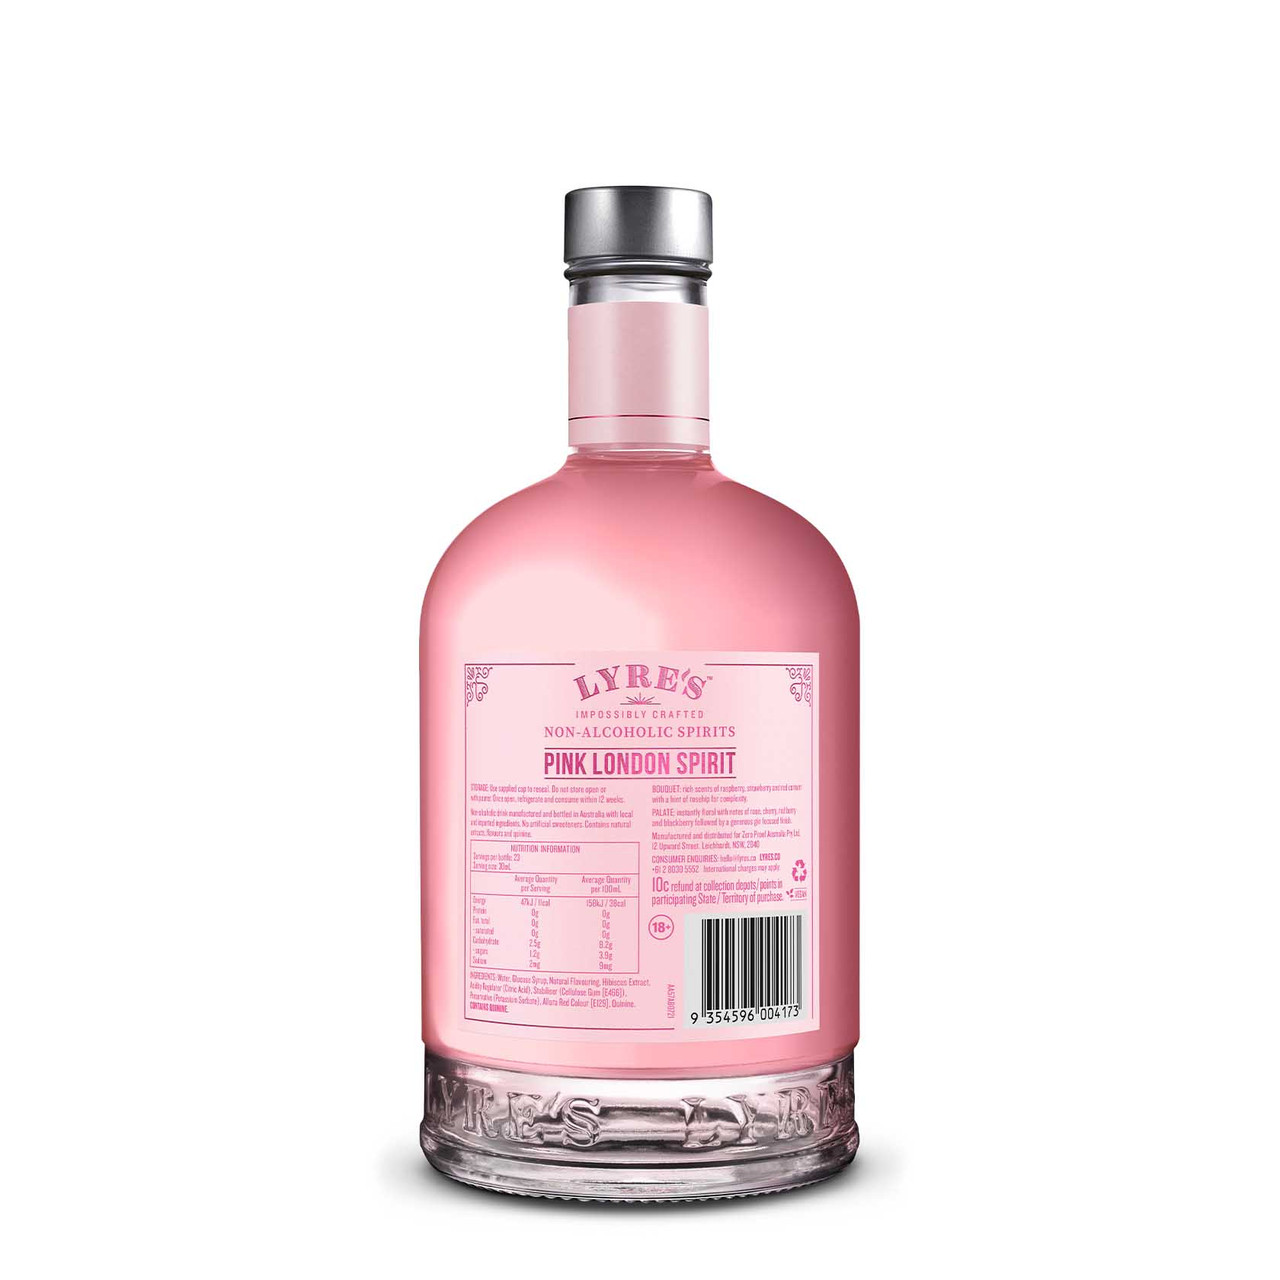 Lyre's Pink London Back bottle